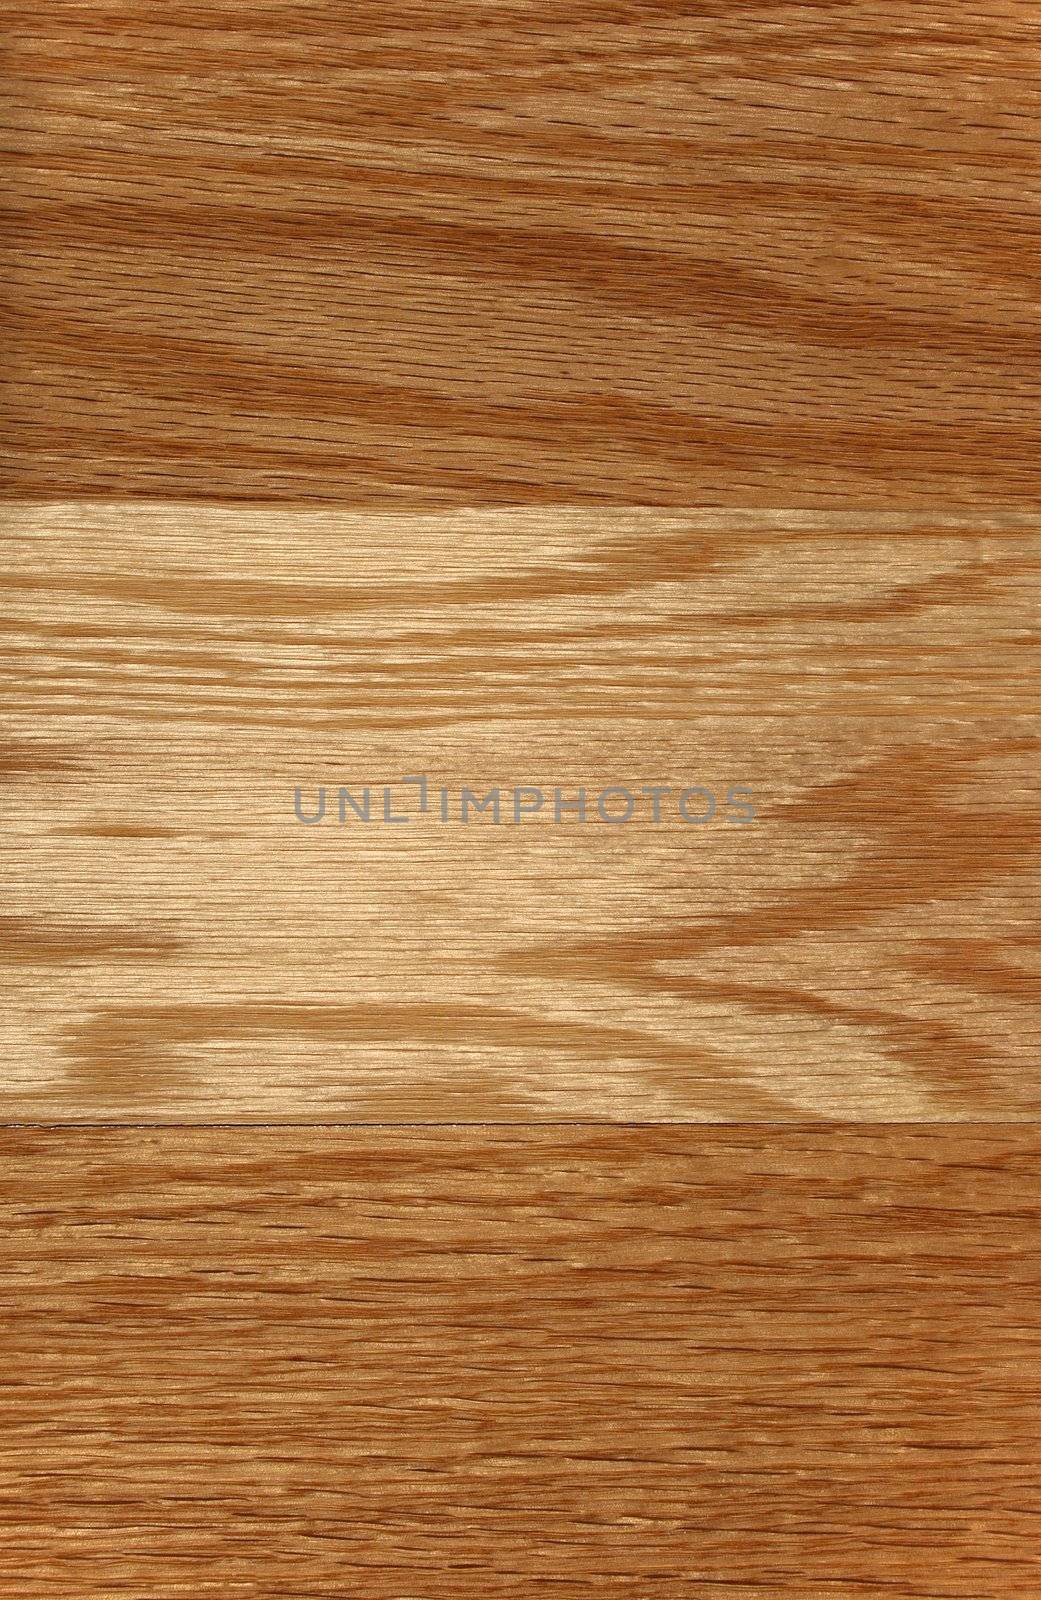 Hardwood floor background by anikasalsera